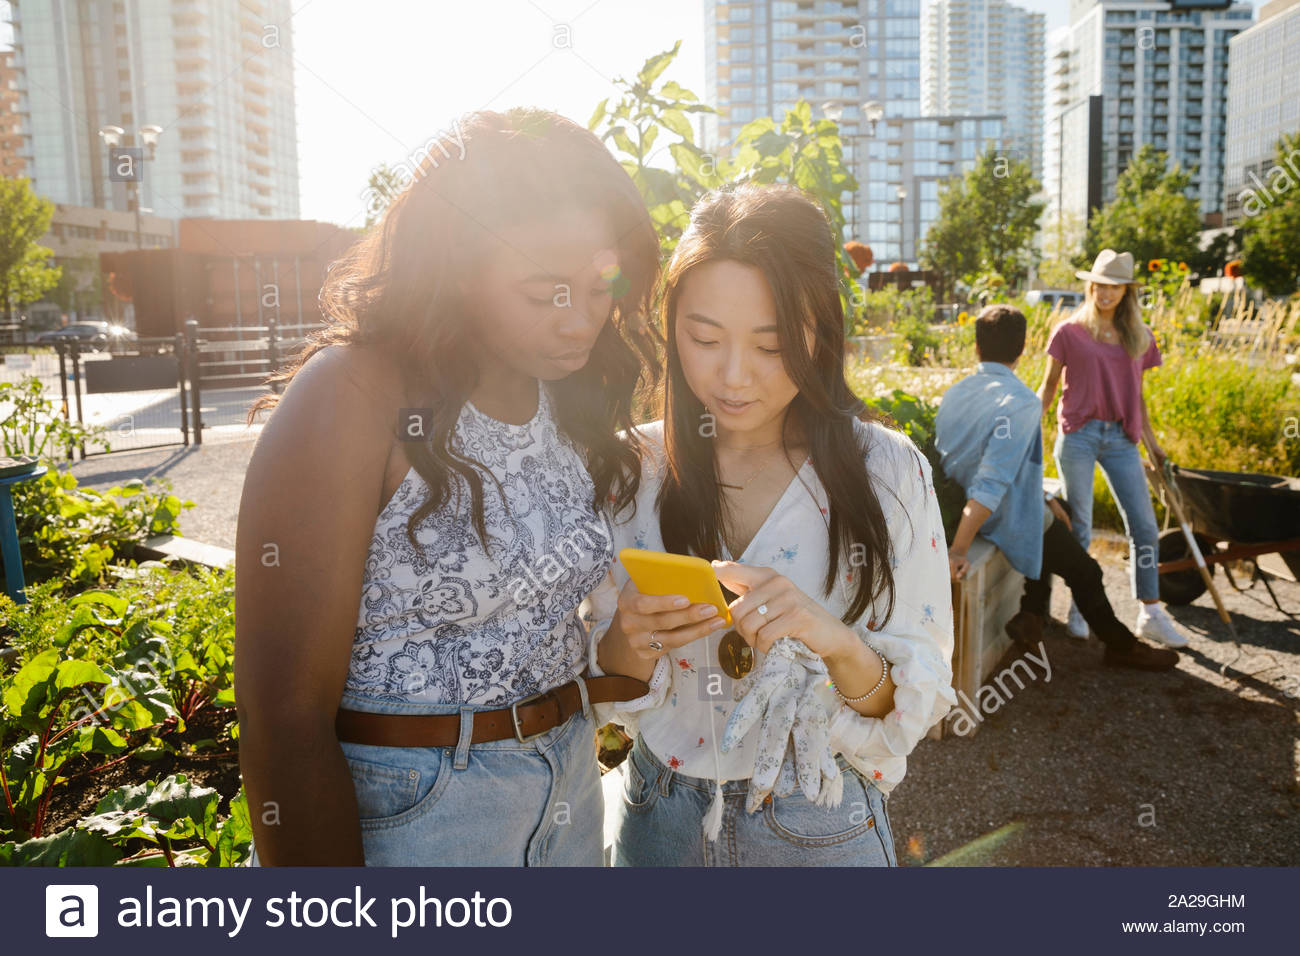 Young women friends using smart phone in sunny, urban community garden Stock Photo